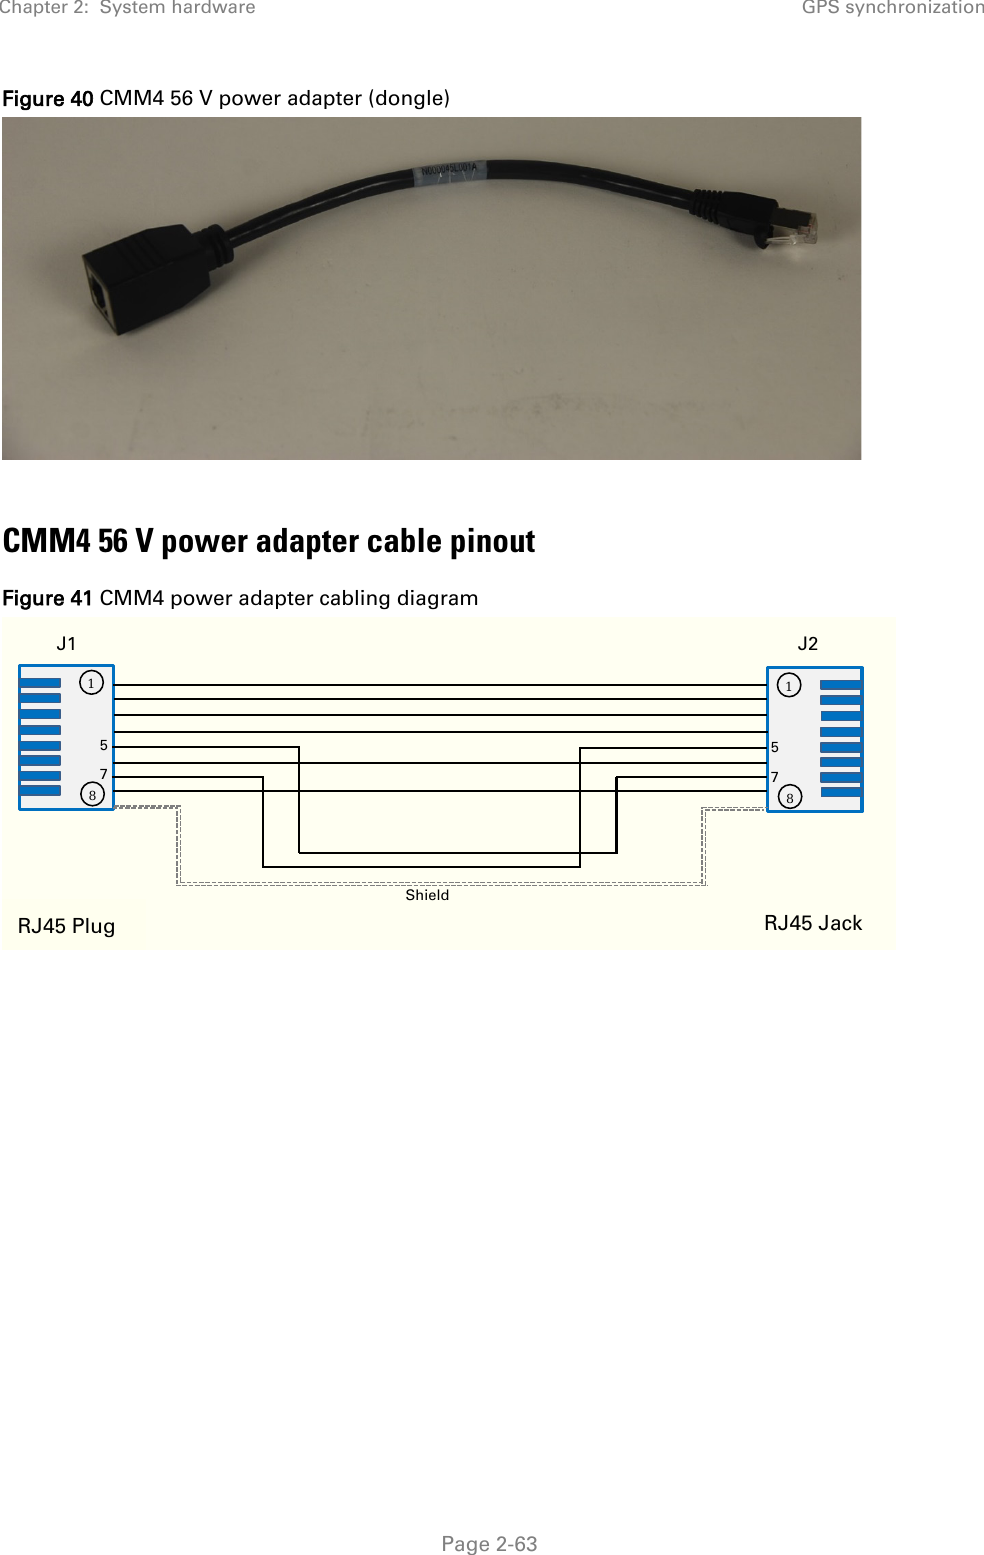 Chapter 2:  System hardware GPS synchronization   Page 2-63 Figure 40 CMM4 56 V power adapter (dongle)   CMM4 56 V power adapter cable pinout Figure 41 CMM4 power adapter cabling diagram   1 8 1 8 J1 J2 RJ45 Plug RJ45 Jack 5 7 5 7 Shield 